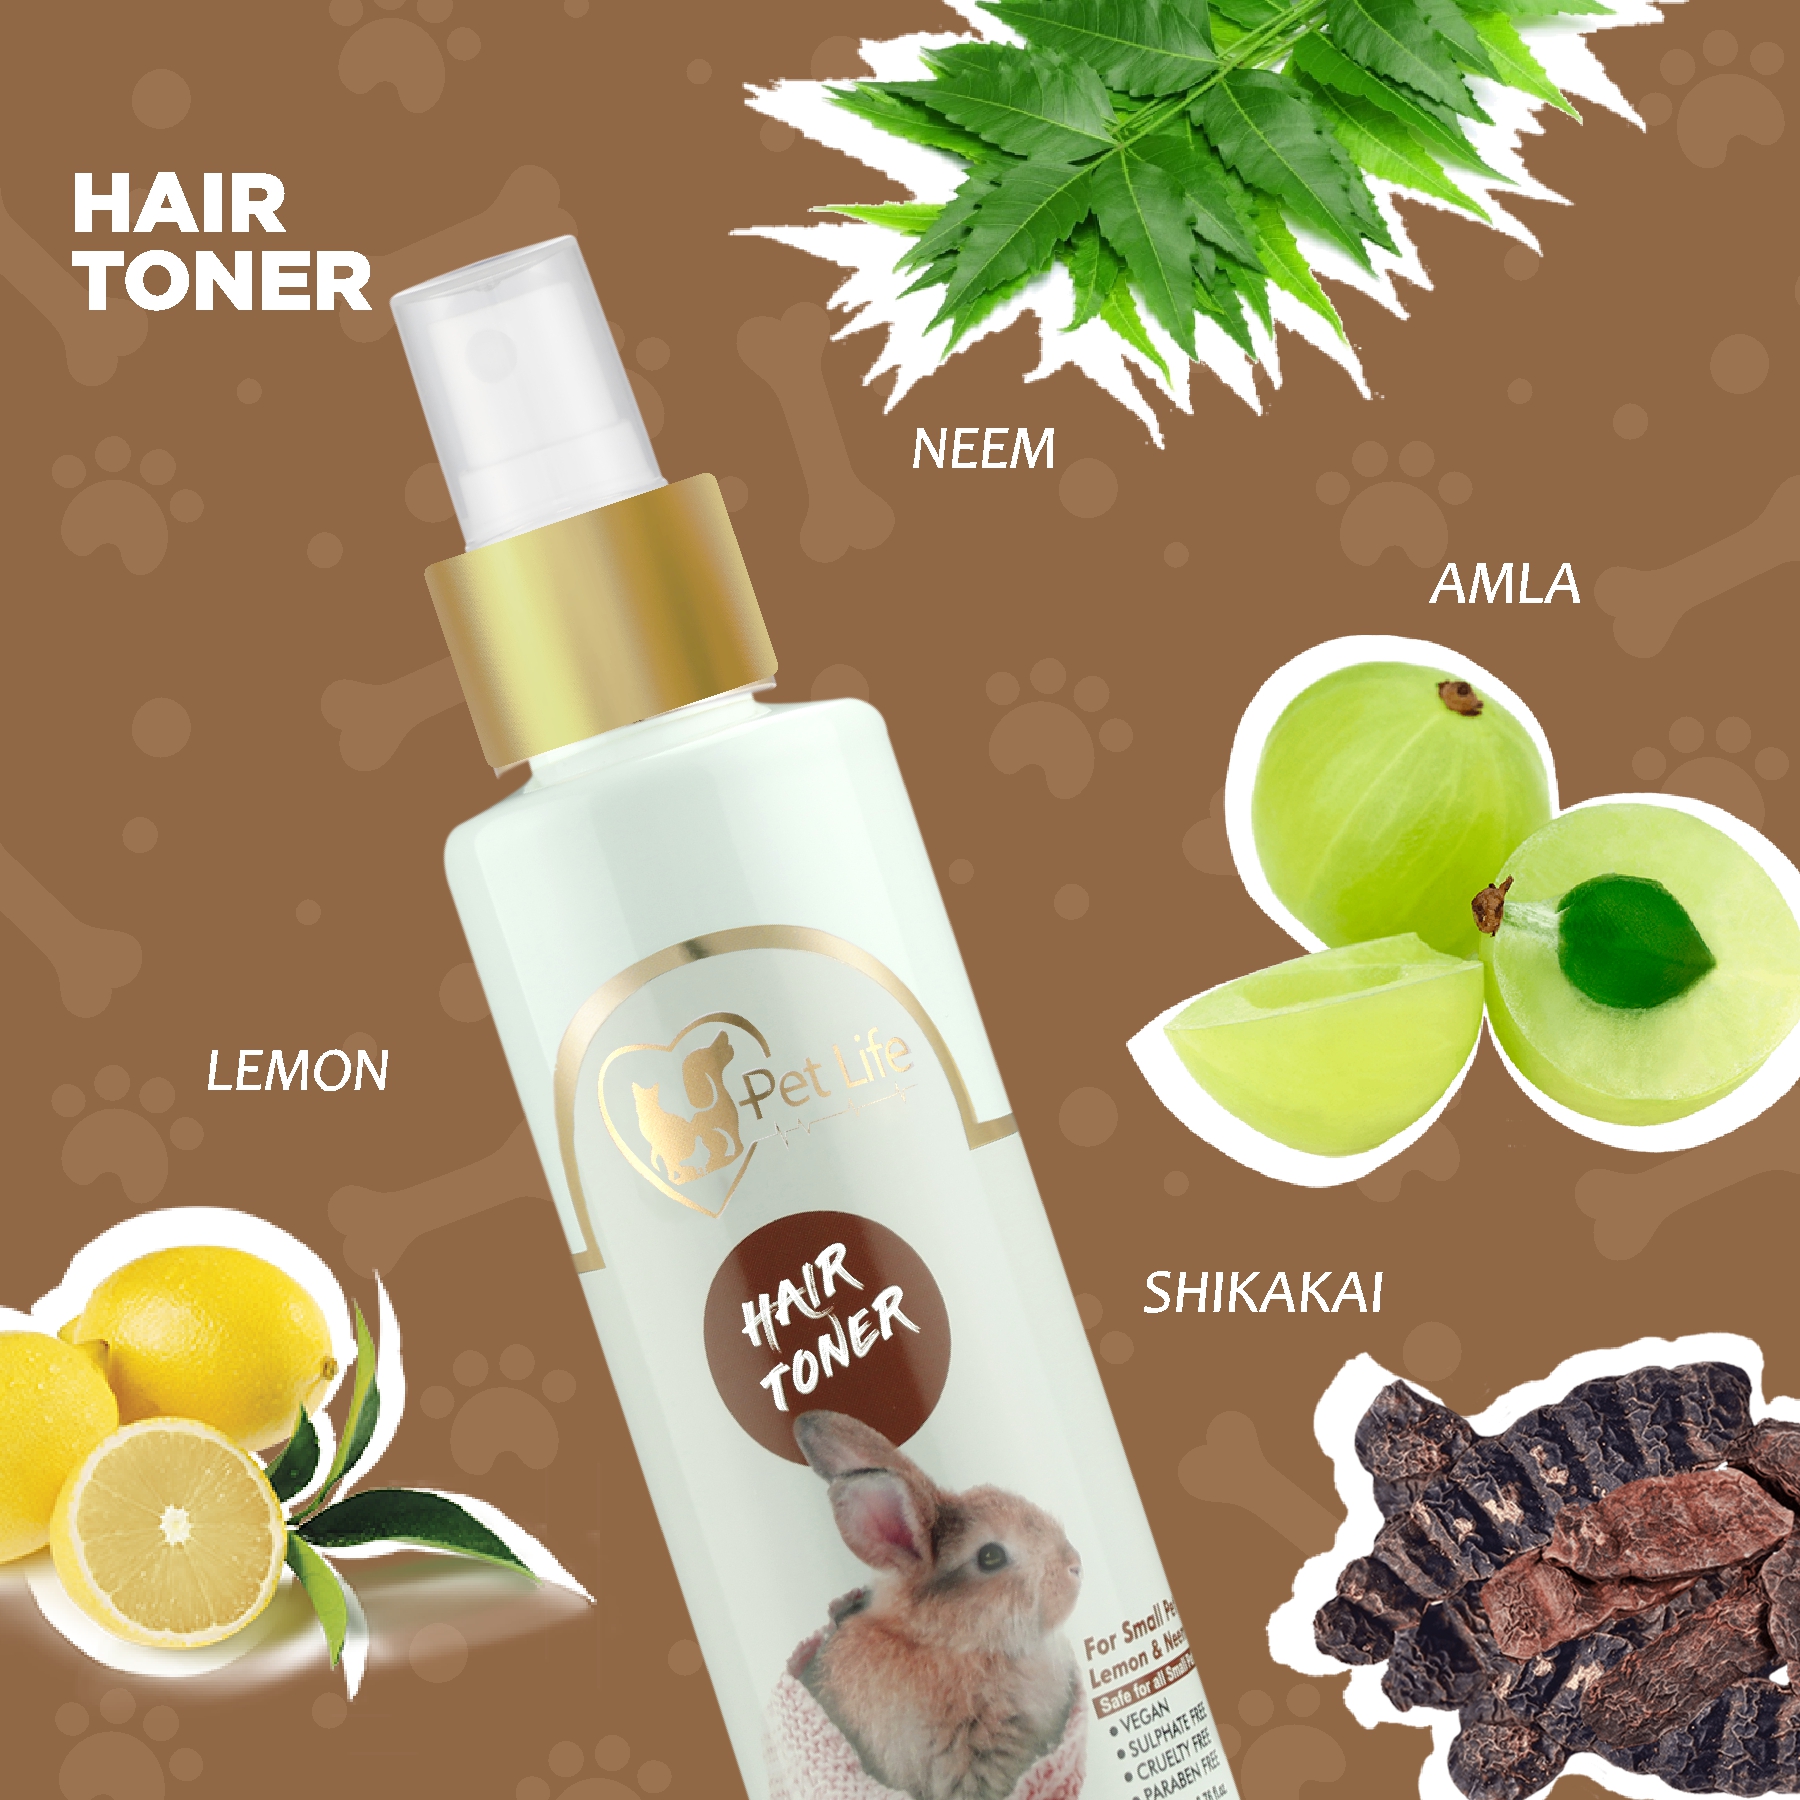 Organic Hair Toner Spray for Small Pets, Rabbits & Kitten Help to Reduce Hair Fall, Shedding, Anti Fungal, Detangled Hair